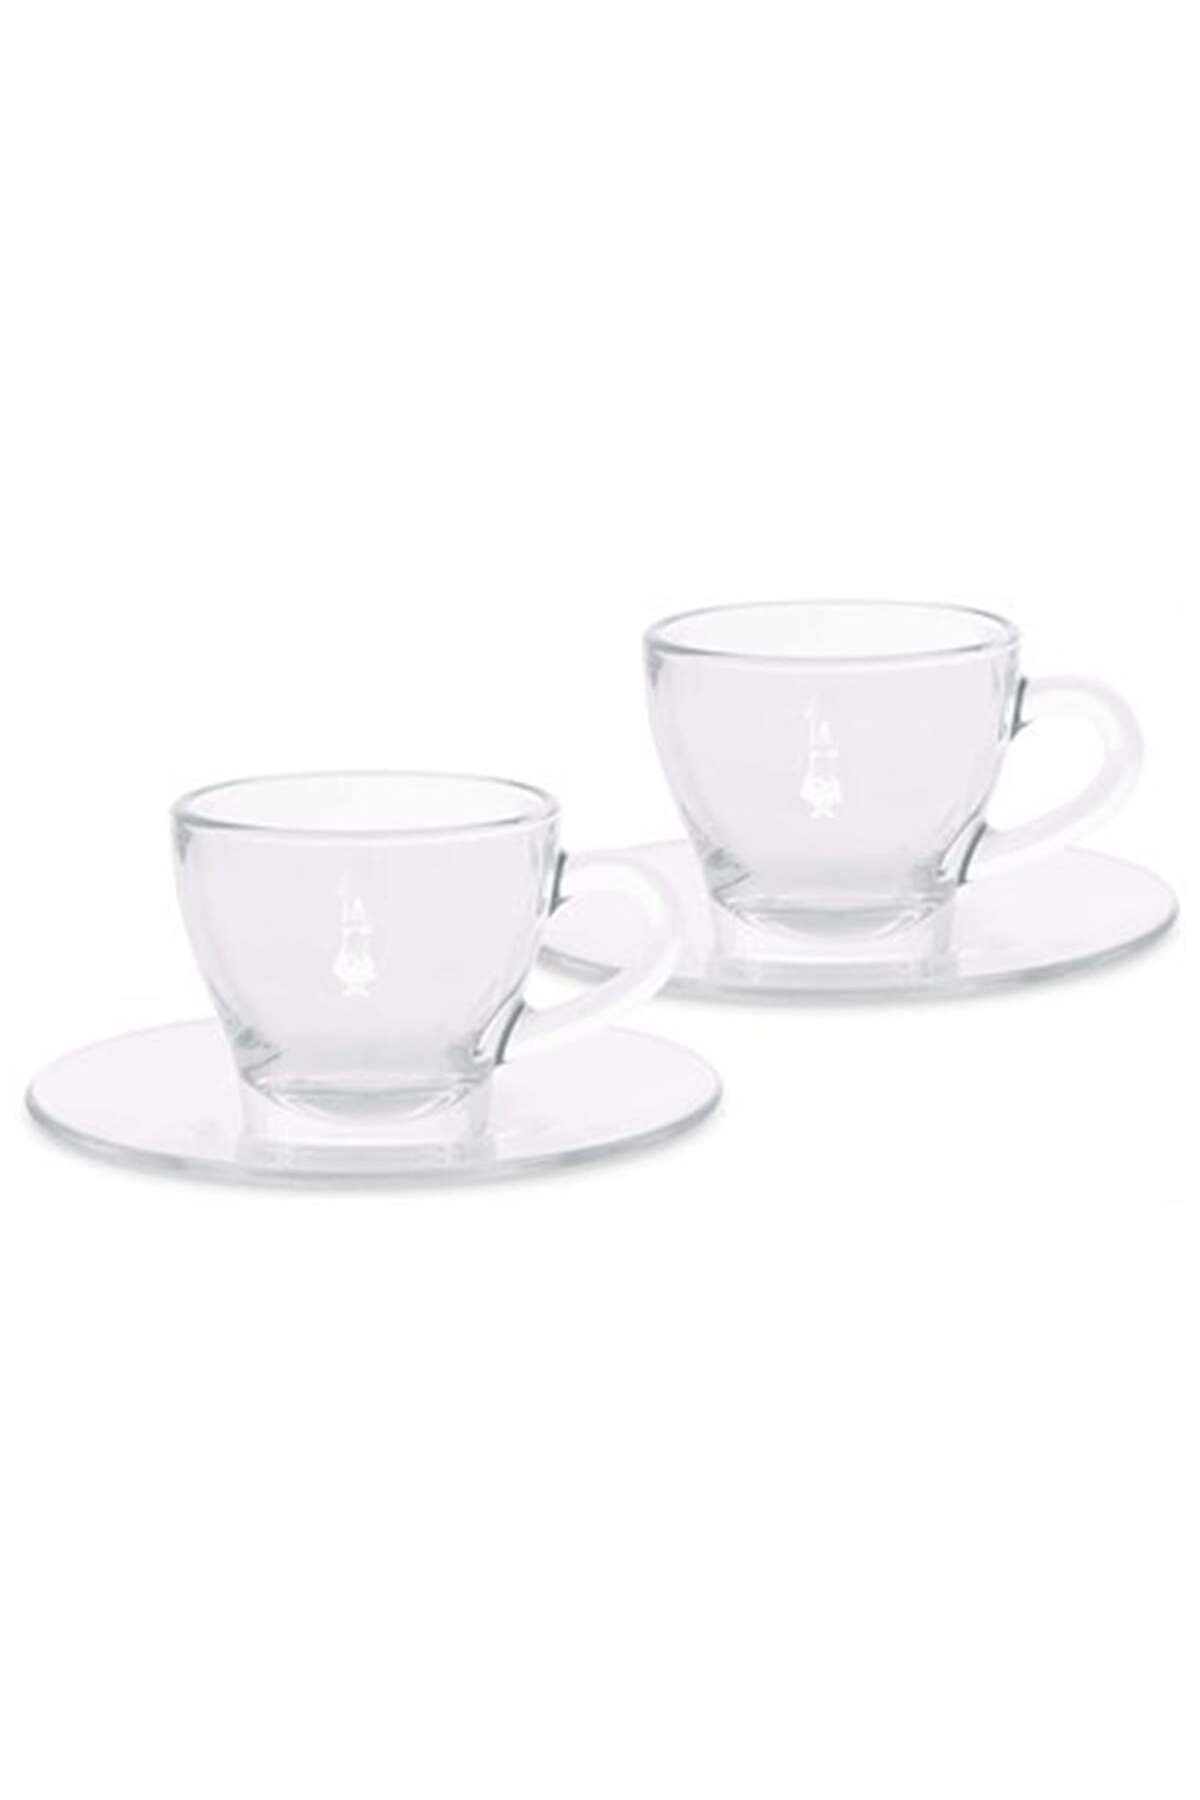 Bialetti Dcrast0007 Set 2 Cappuccıo Cups Glass